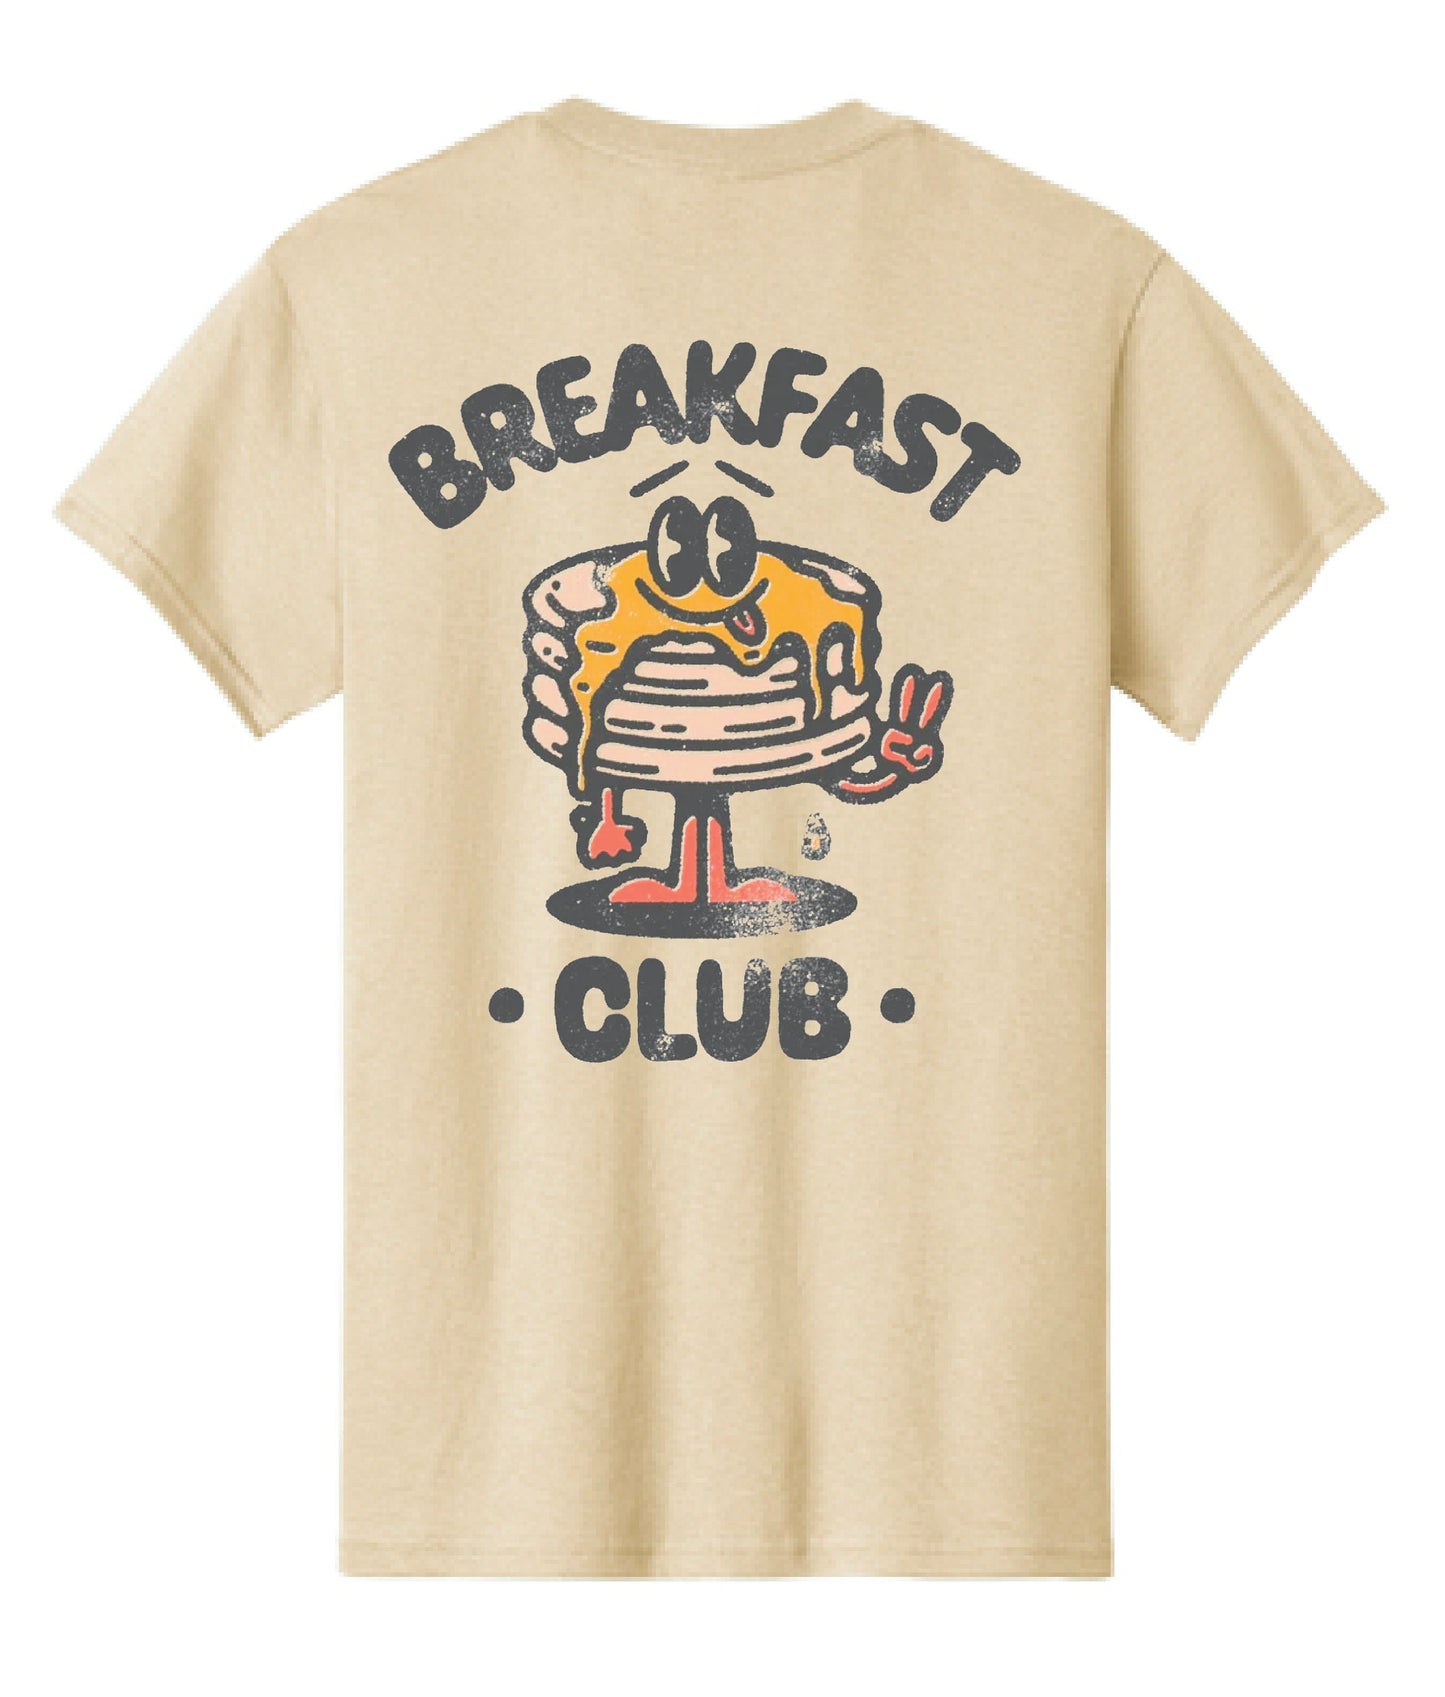 Breakfast Club Aesthetic Bohemian Retro Vintage Graphic Tee | Retro Graphic Tee | Grunge Hippie Boho Graphic | Unisex Sizes